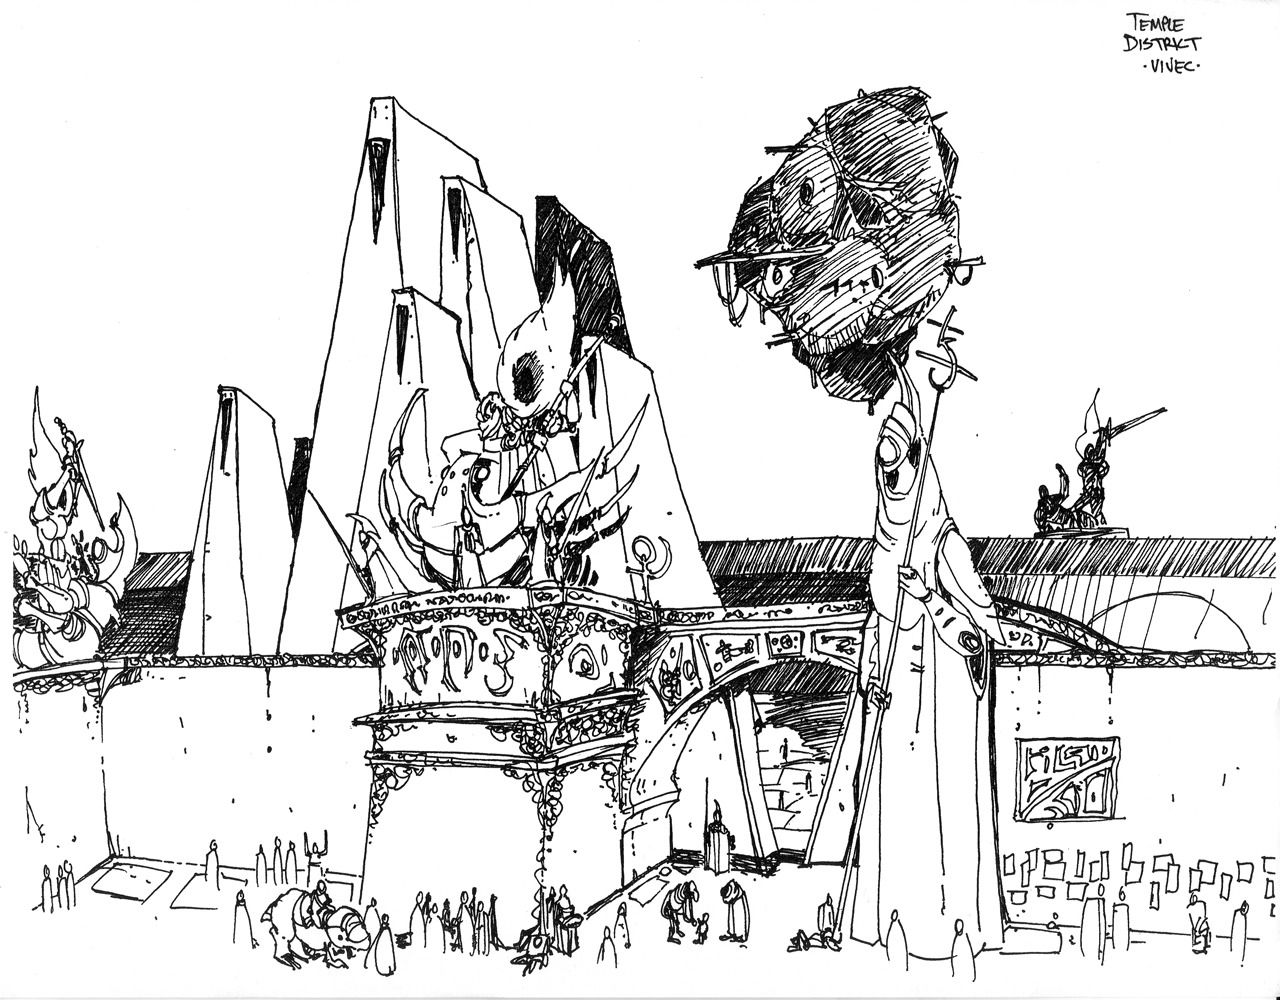 Concept art of the temple district of Vivec in The Elder Scrolls III: Morrowind